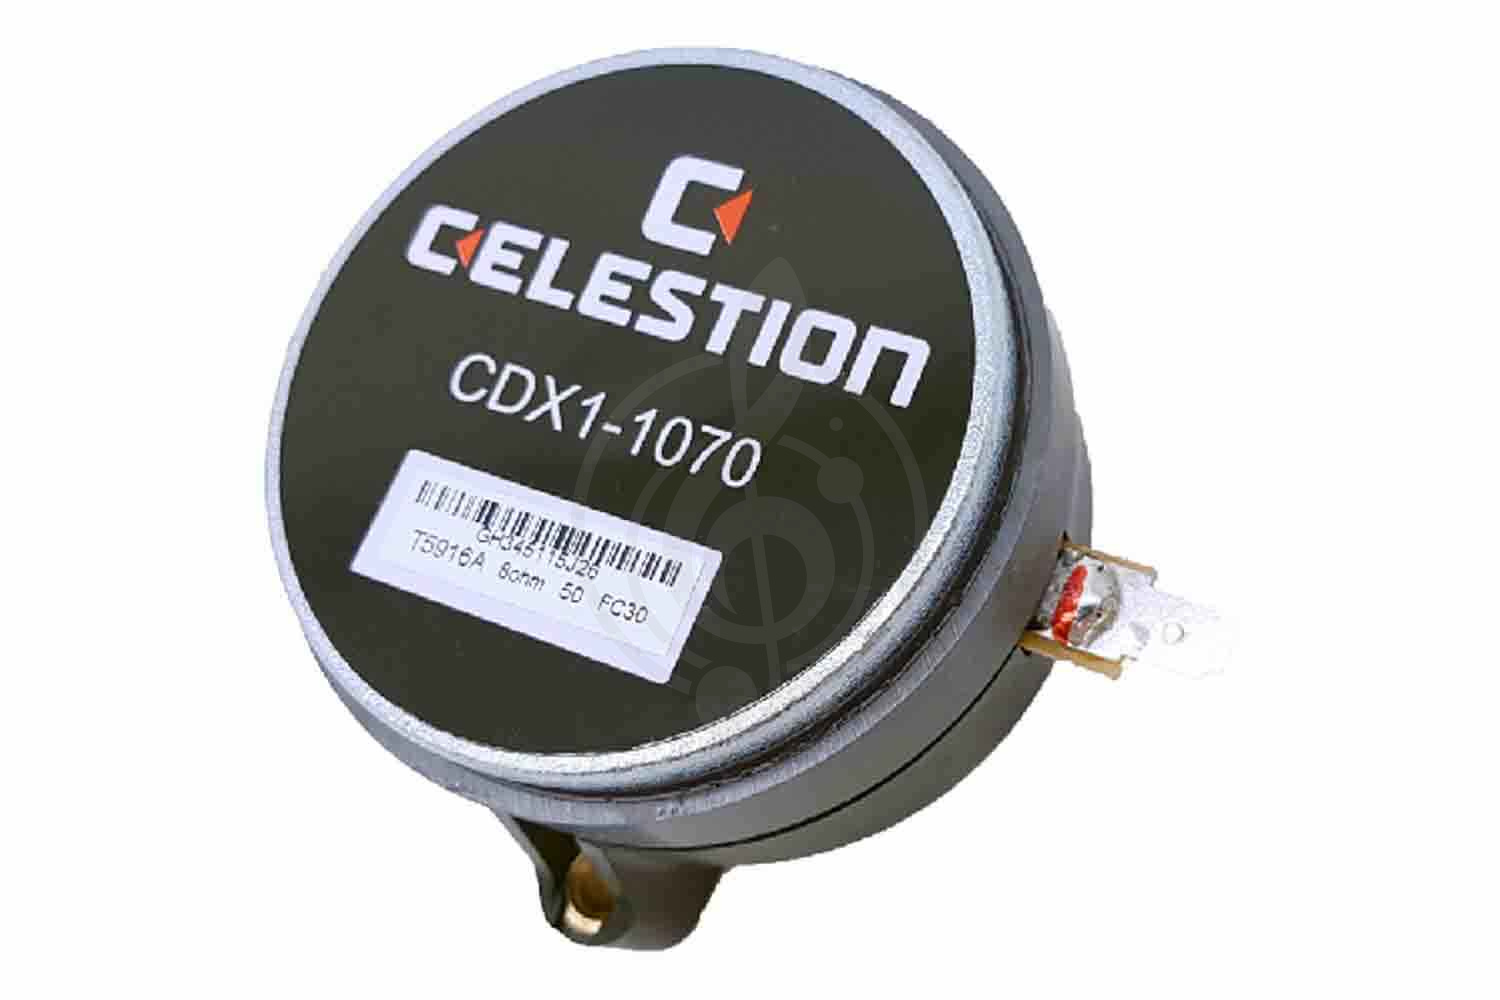  Celestion CDX1-1070 - Драйвер ВЧ, 8 Ом, 12 Вт, Celestion CDX1-1070 в магазине DominantaMusic - фото 1